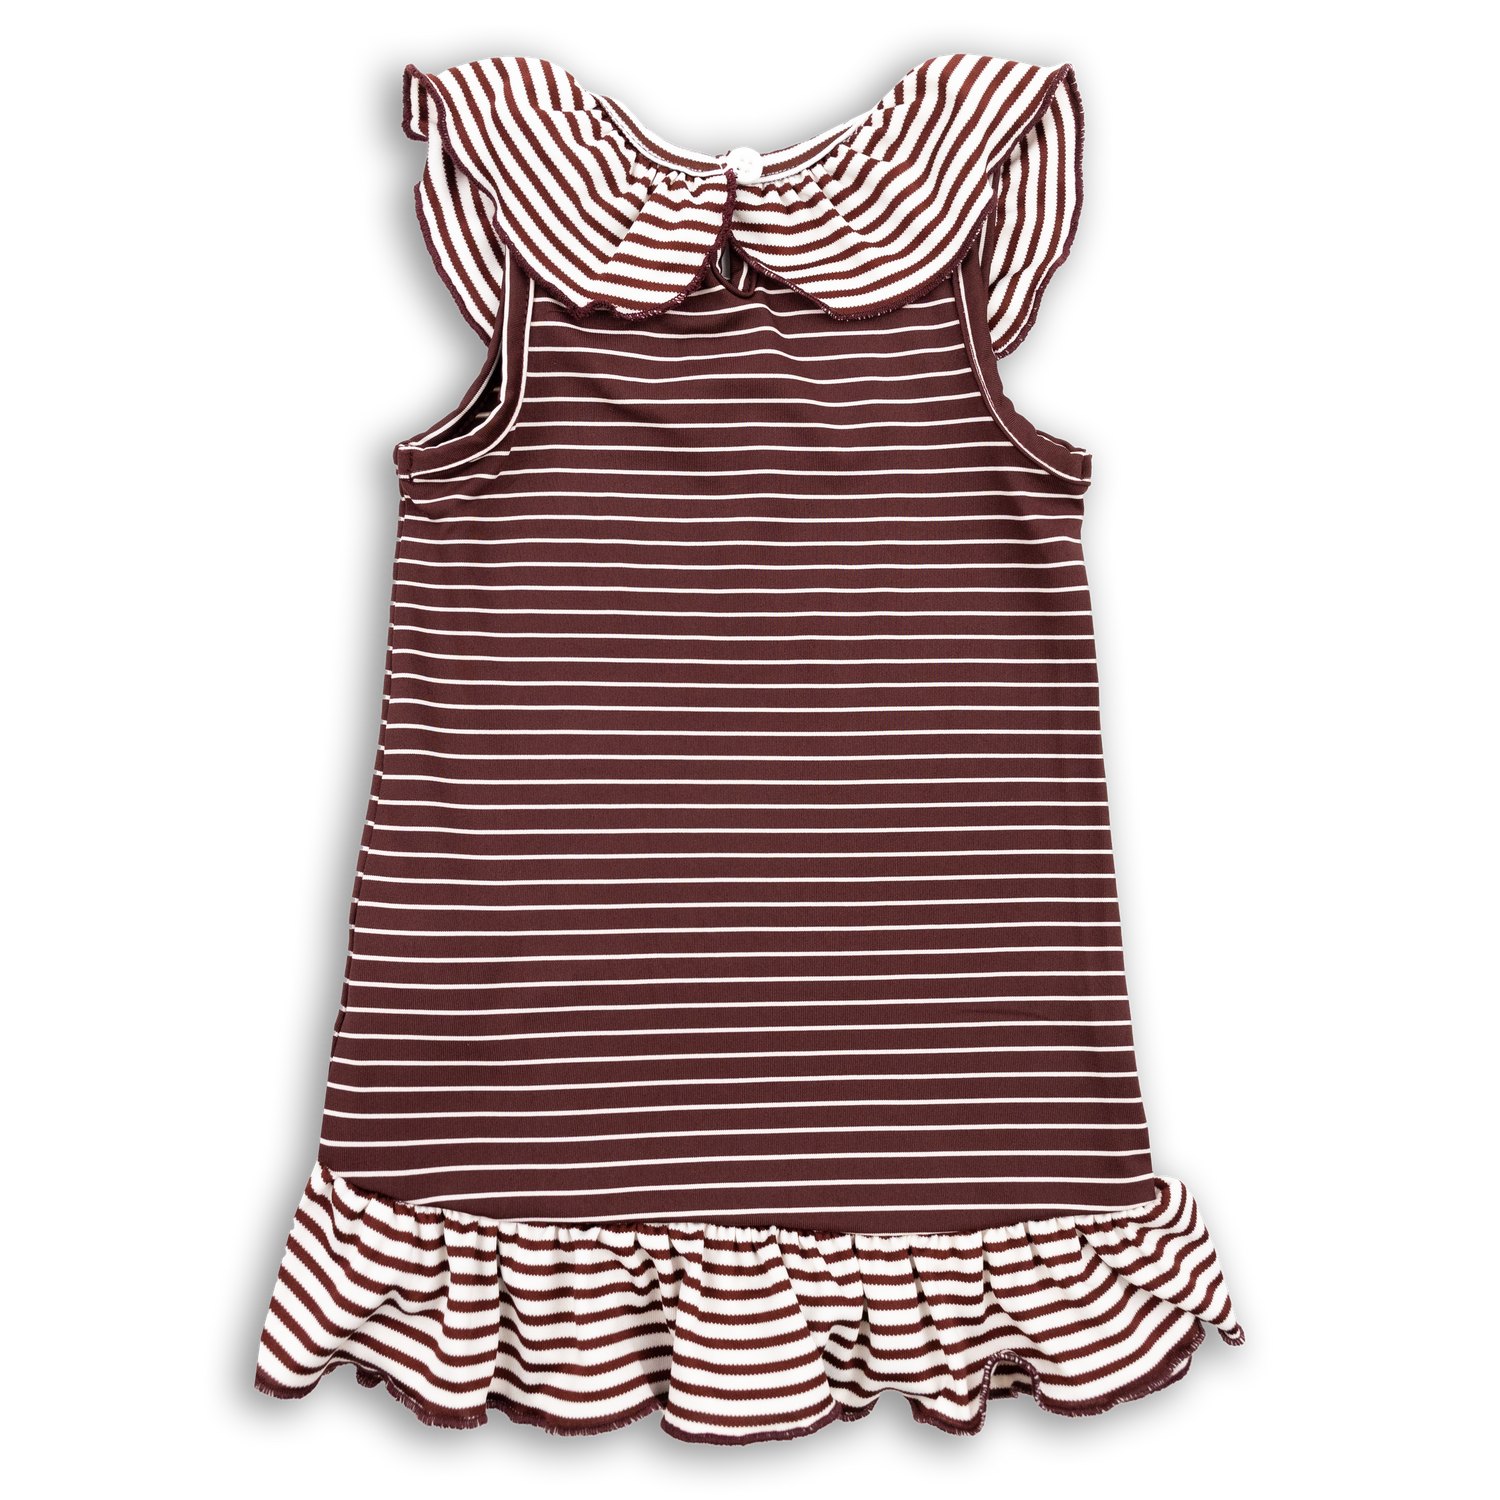 Maroon & White Striped Infant/Toddler Dress